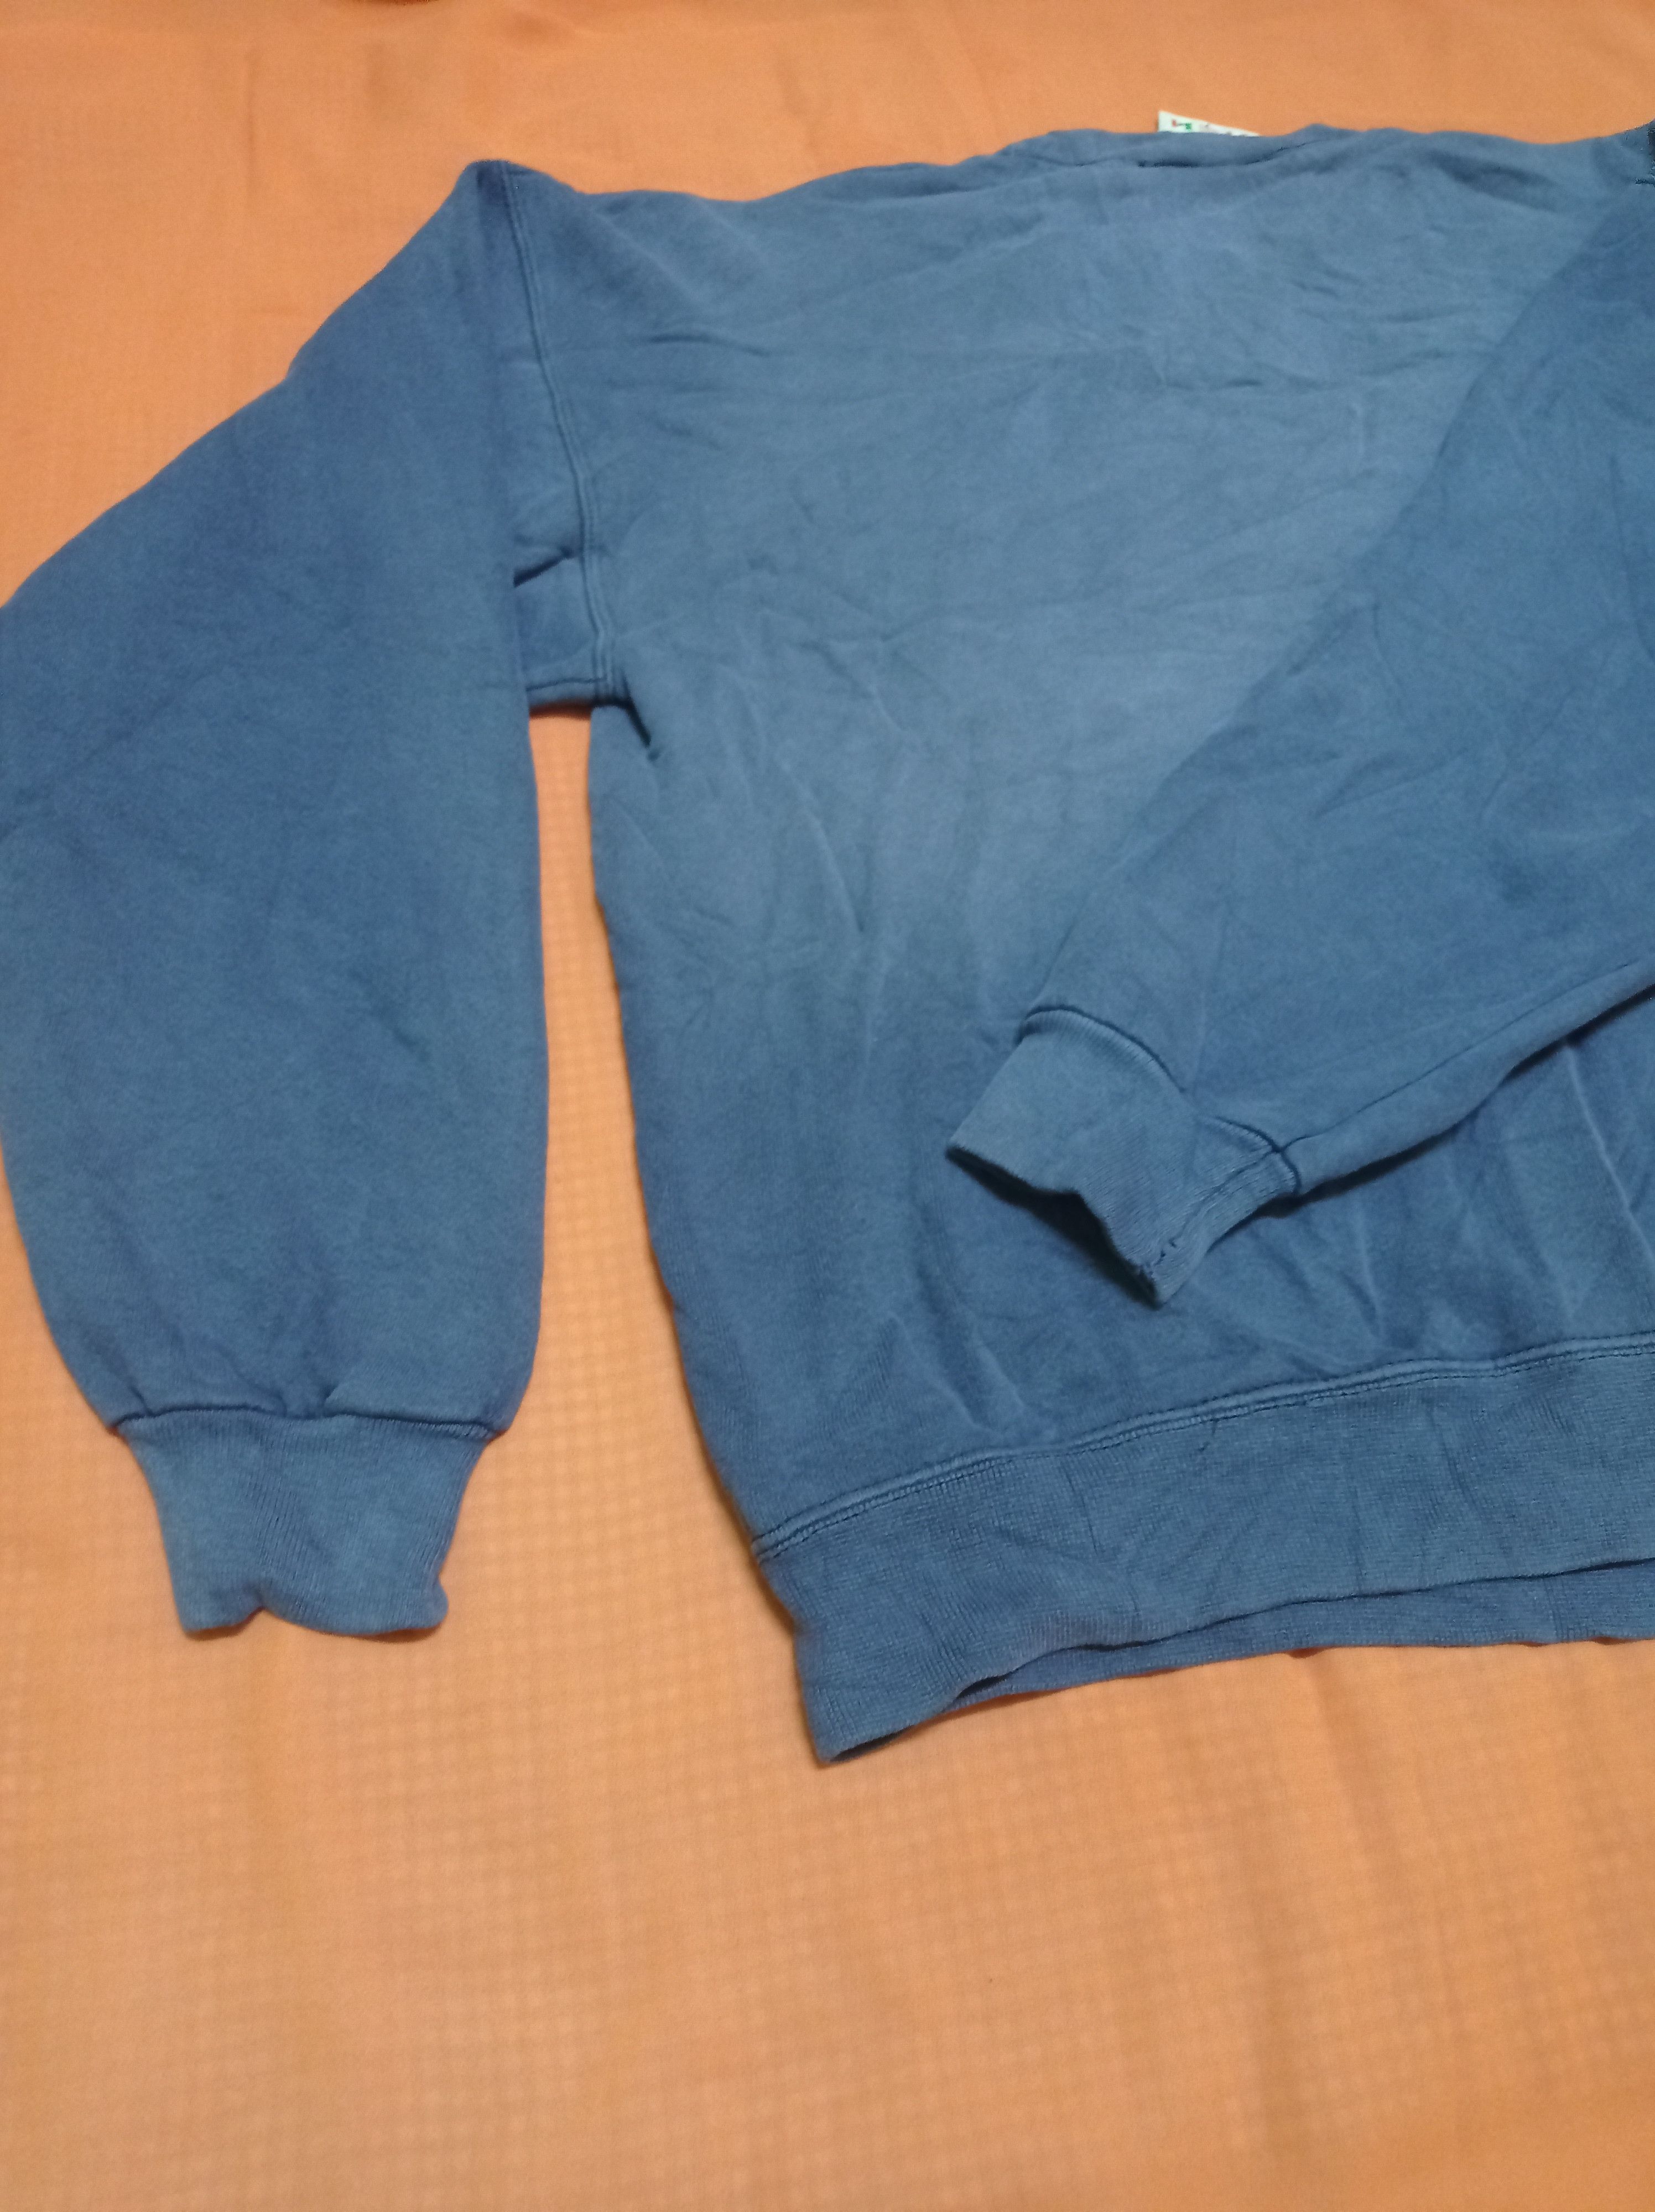 Vintage 💥ADIDAS BUNGO SOBAT, RETRO OLD ADIDAS VINTAGE ❌ Sweatshirts Size US S / EU 44-46 / 1 - 5 Thumbnail